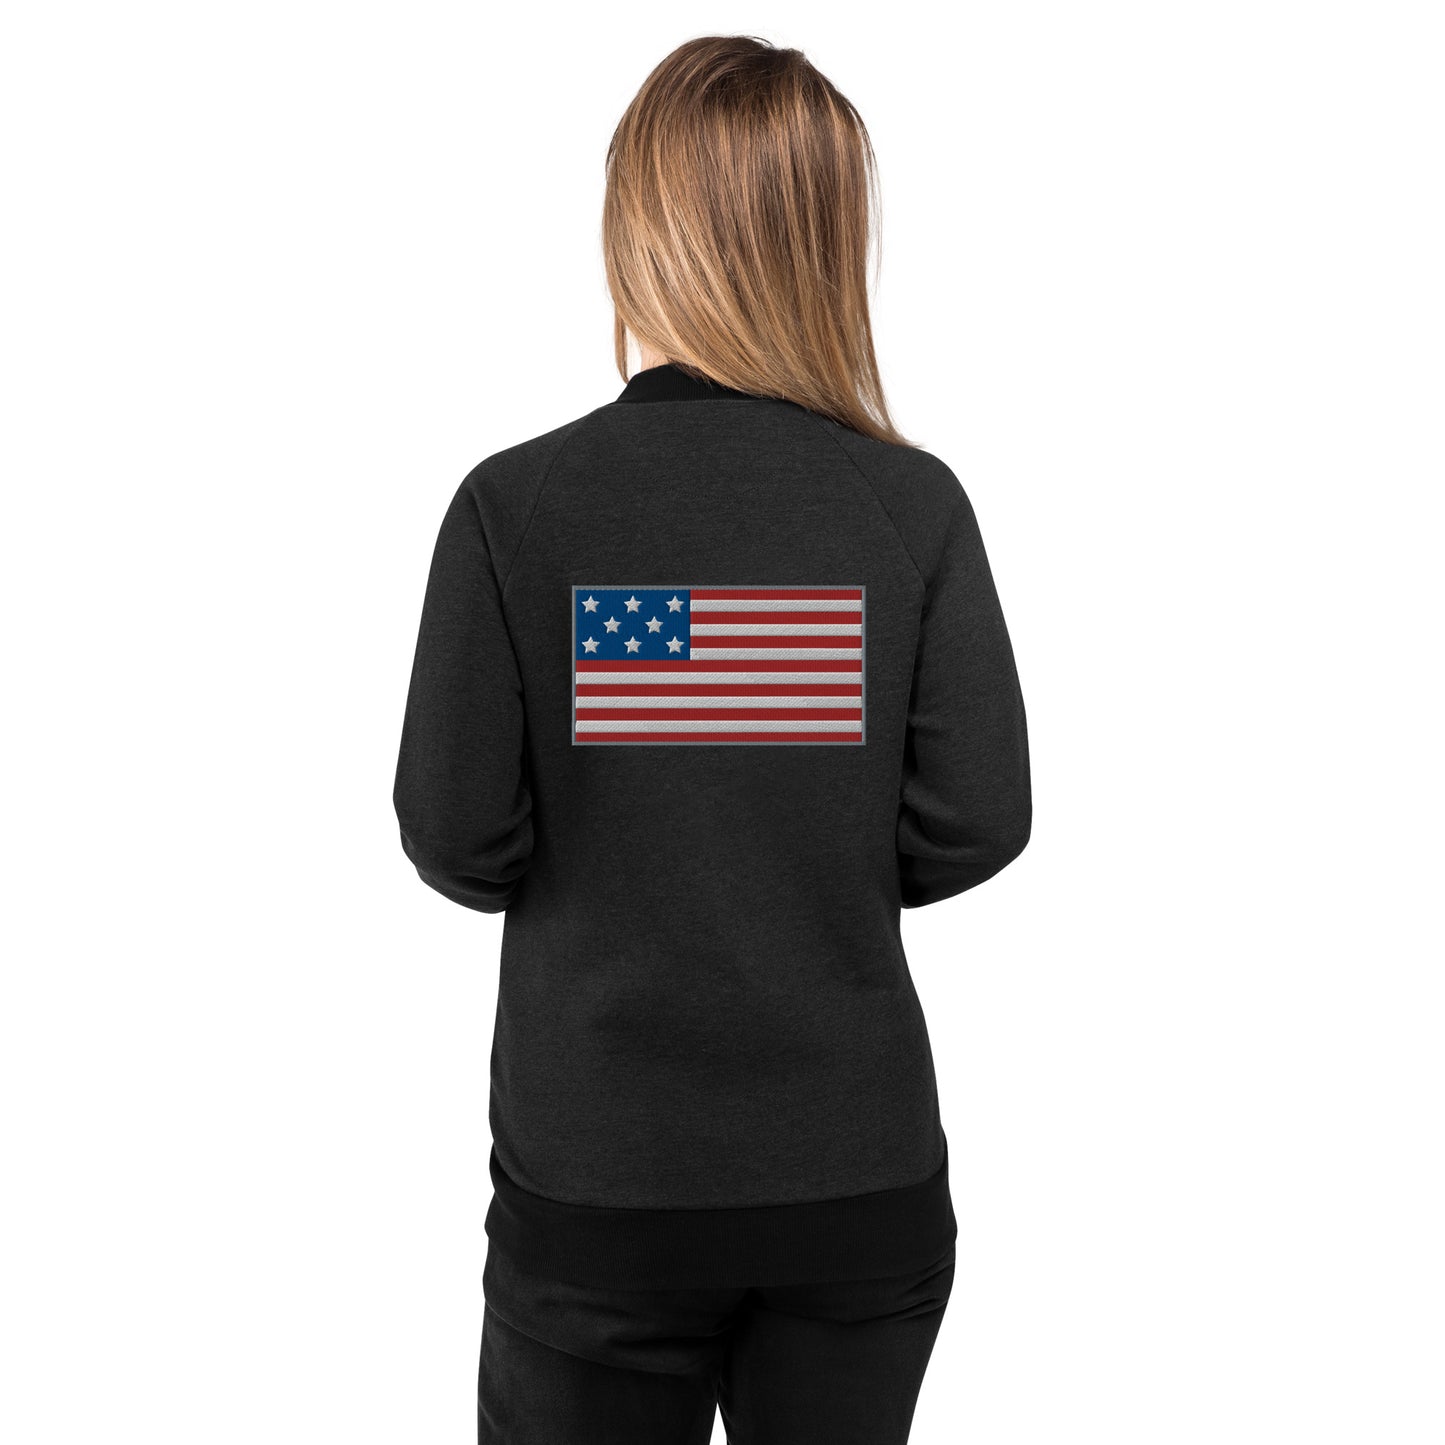 USA Flag Embroidery - Sustainably Made Jacket